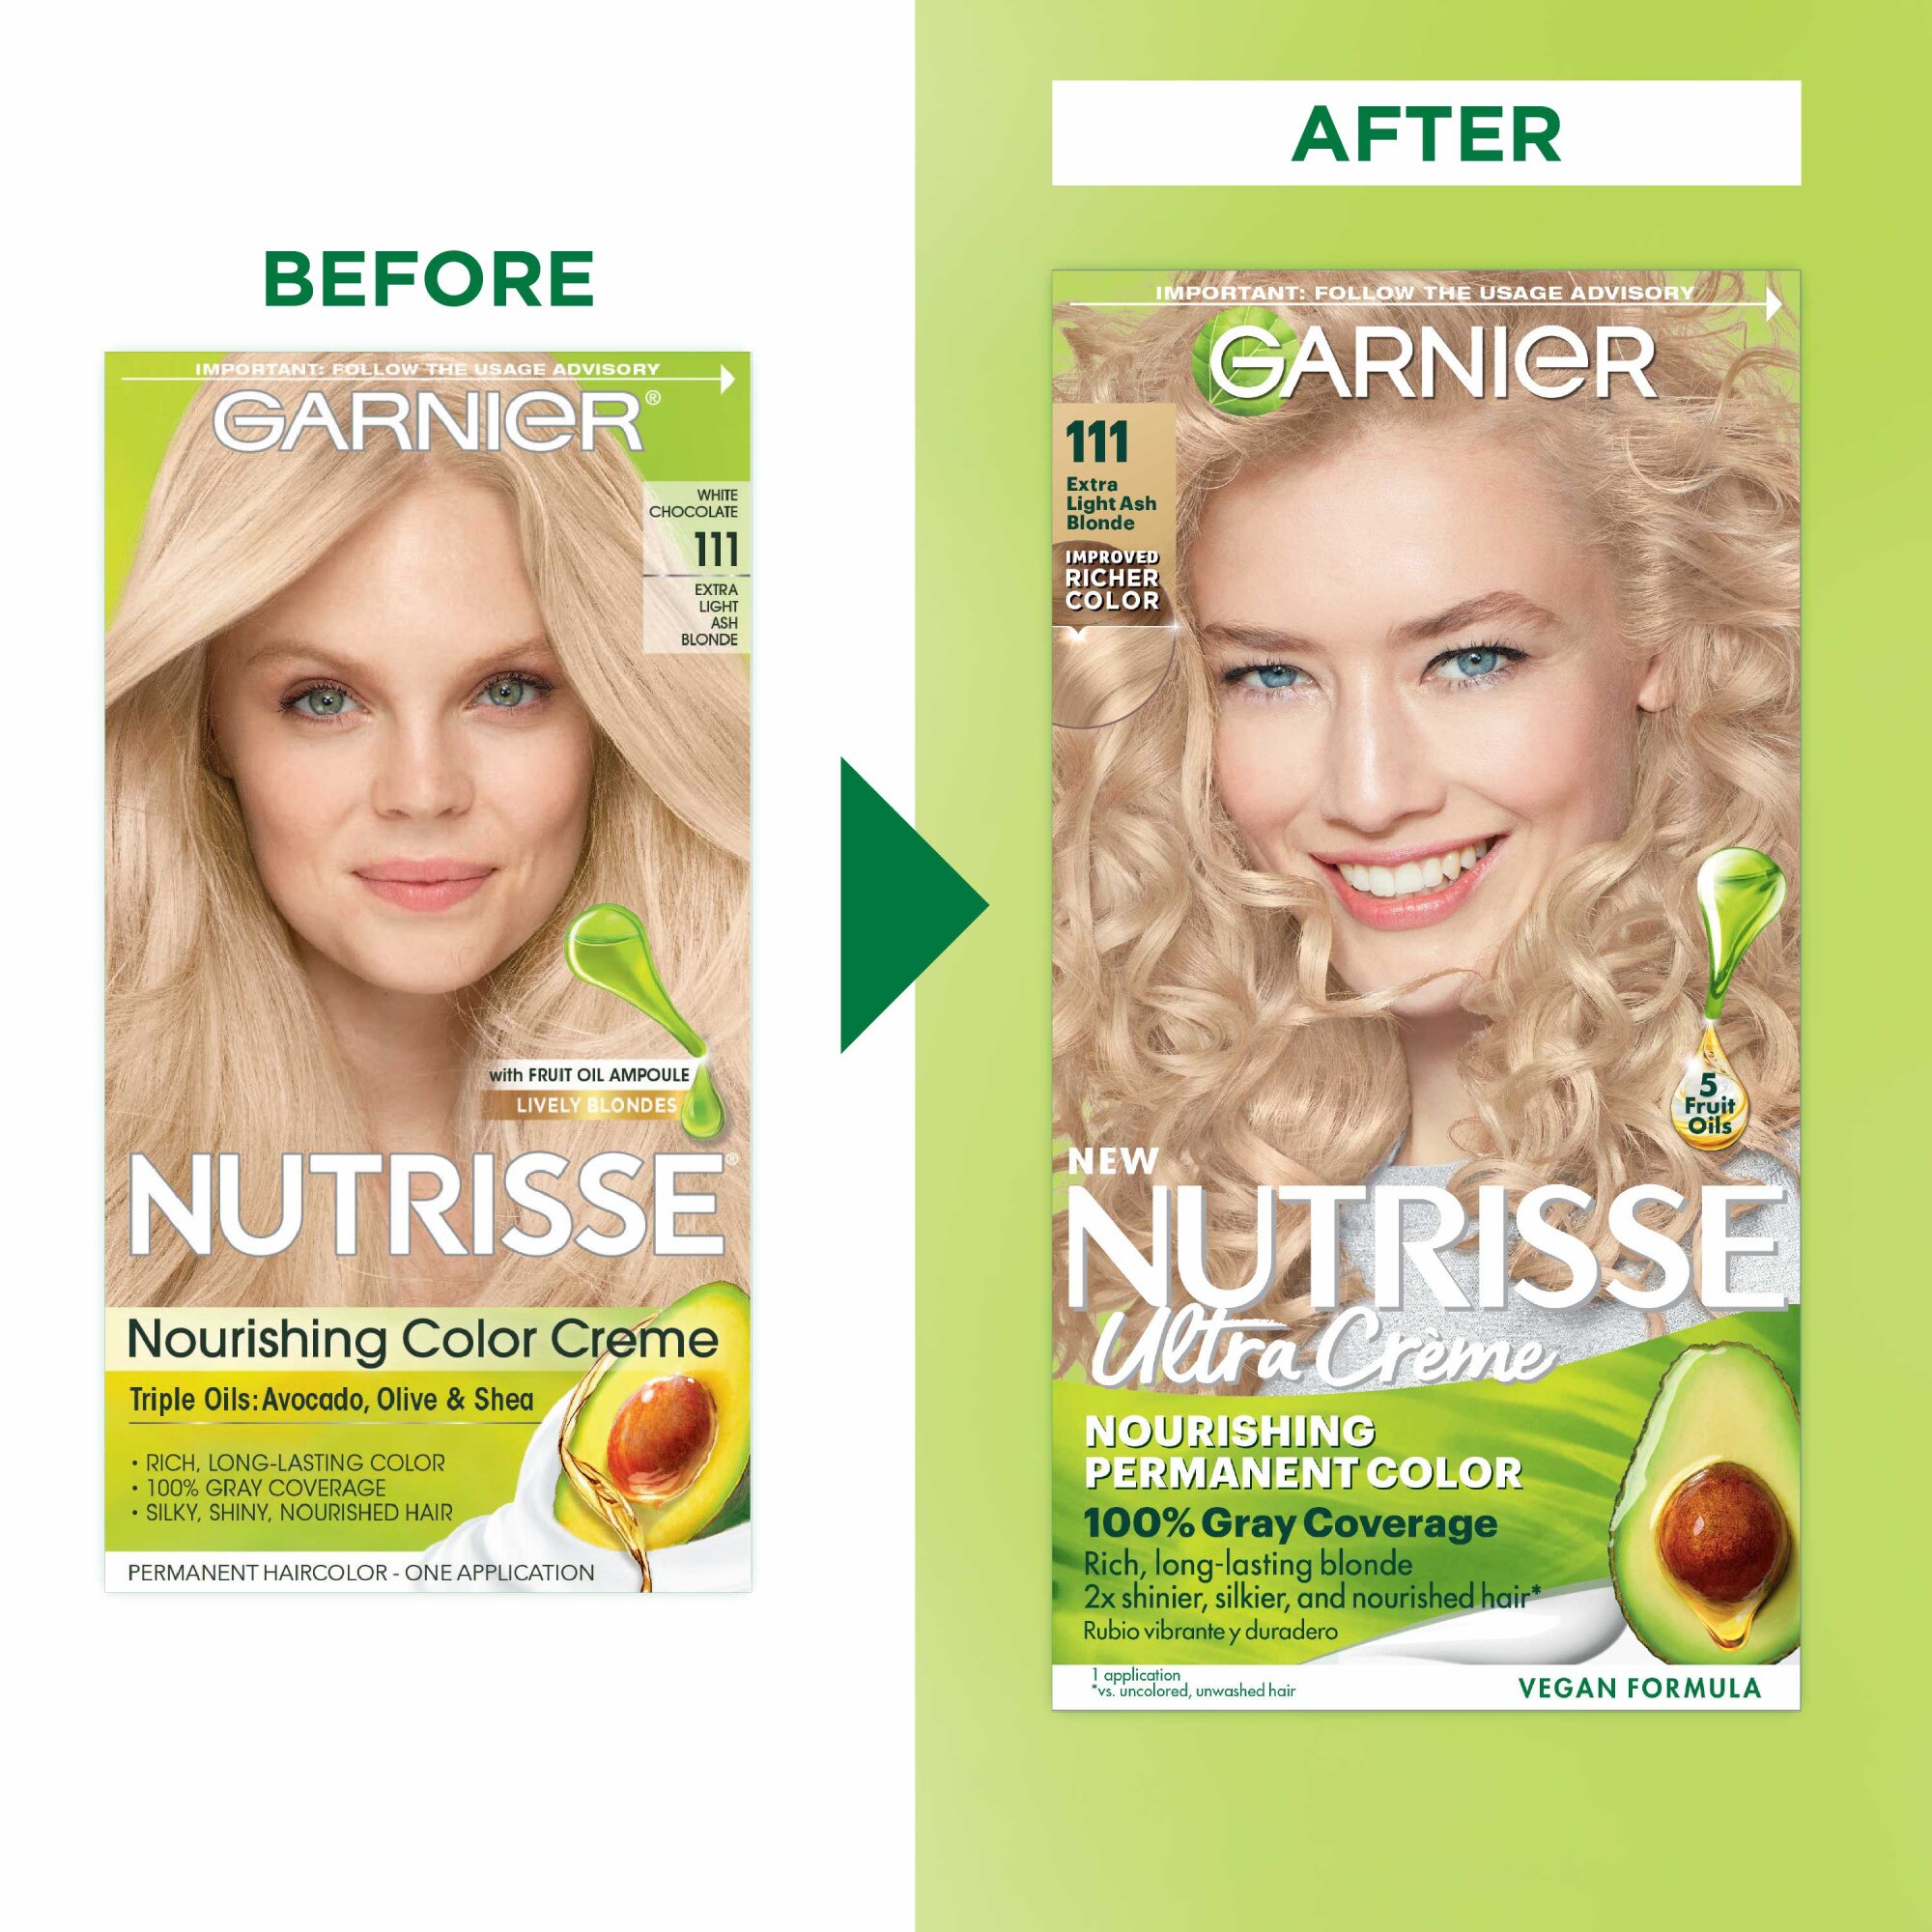 Garnier Nutrisse Permanent Nourishing Hair Color Creme With Photos Prices Reviews Cvs Pharmacy